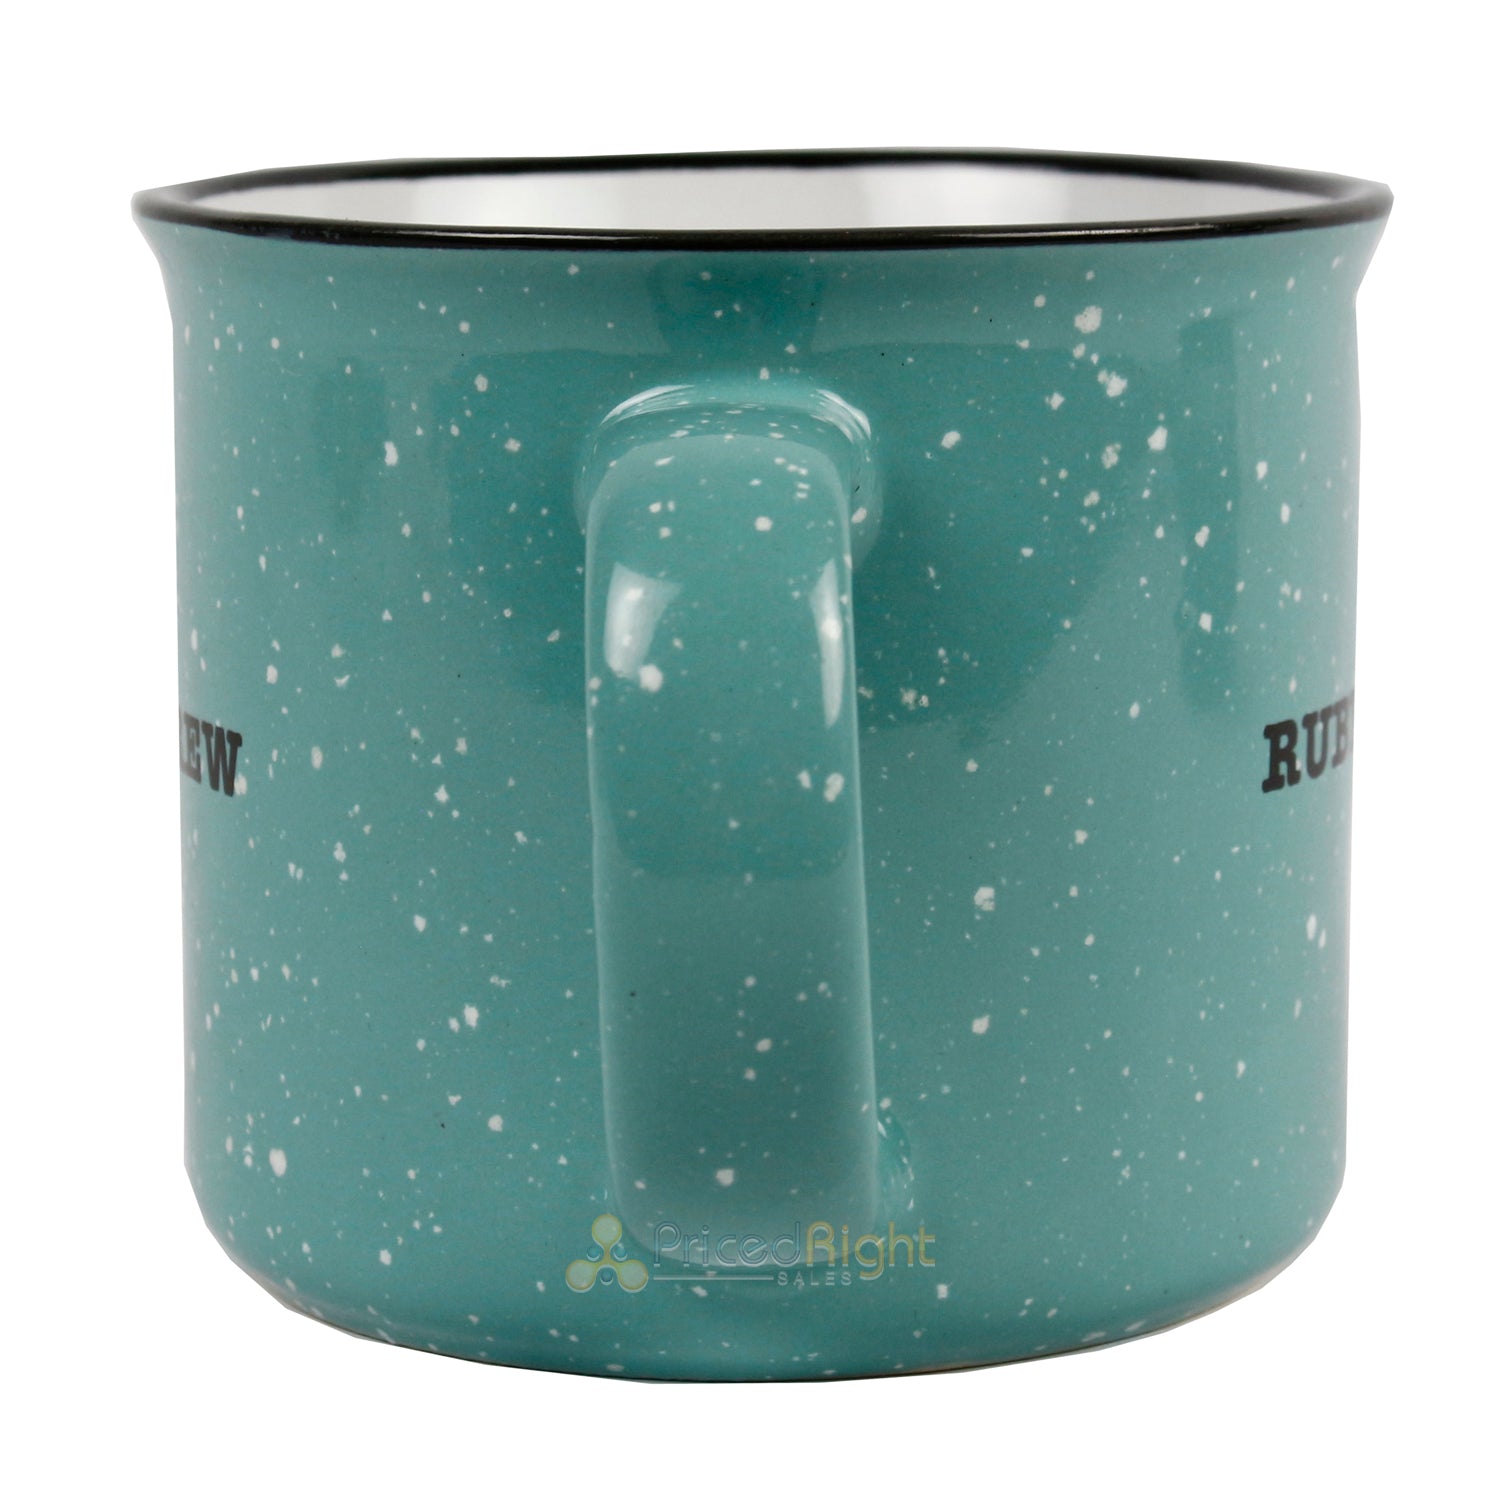 Ruby Brew Campfire Ceramic Microwave-Safe Mug With Handle 13 Oz. Speckled Teal